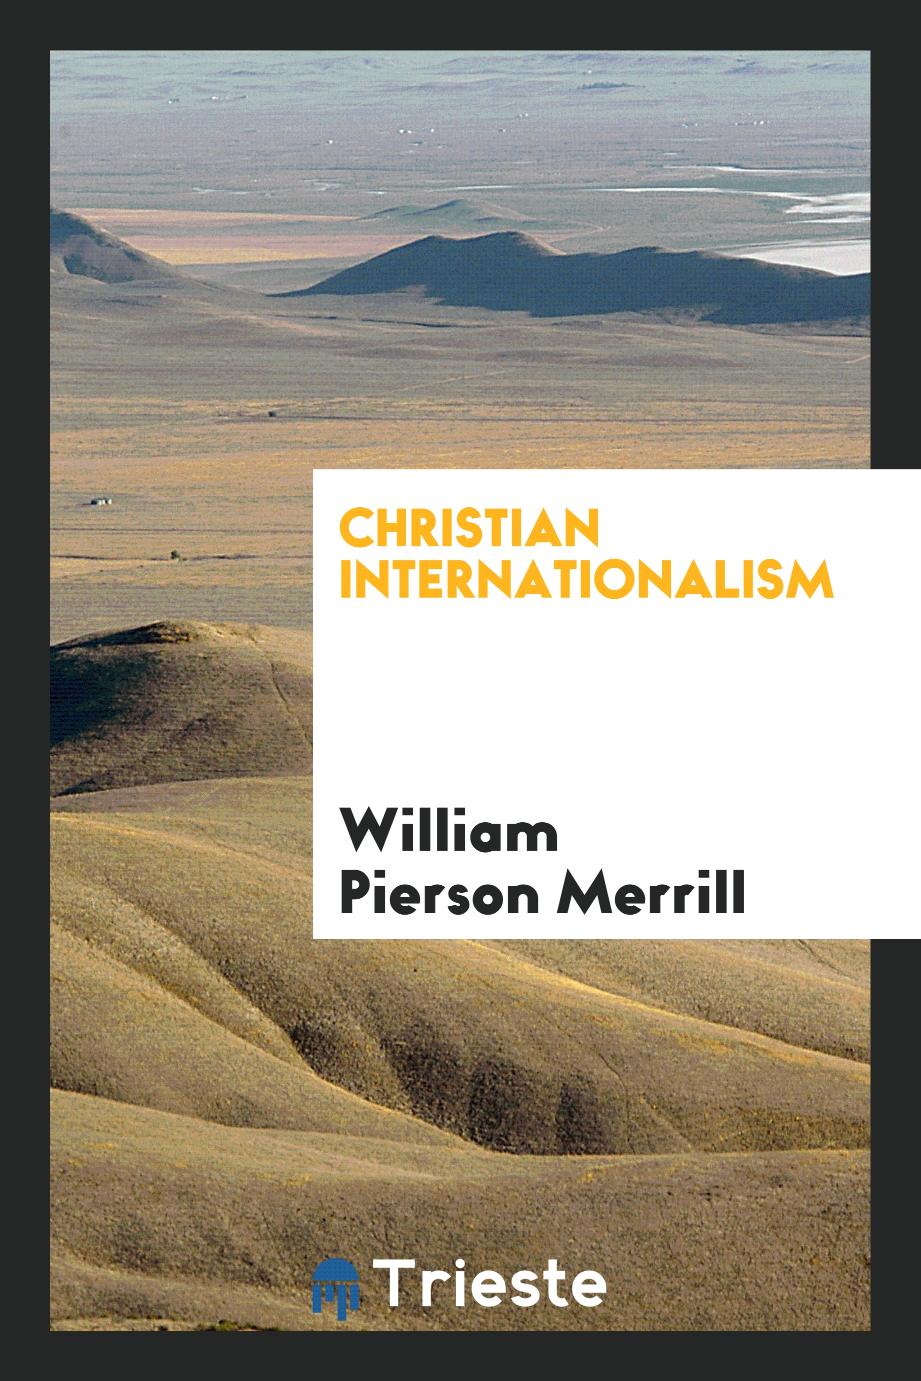 Christian Internationalism